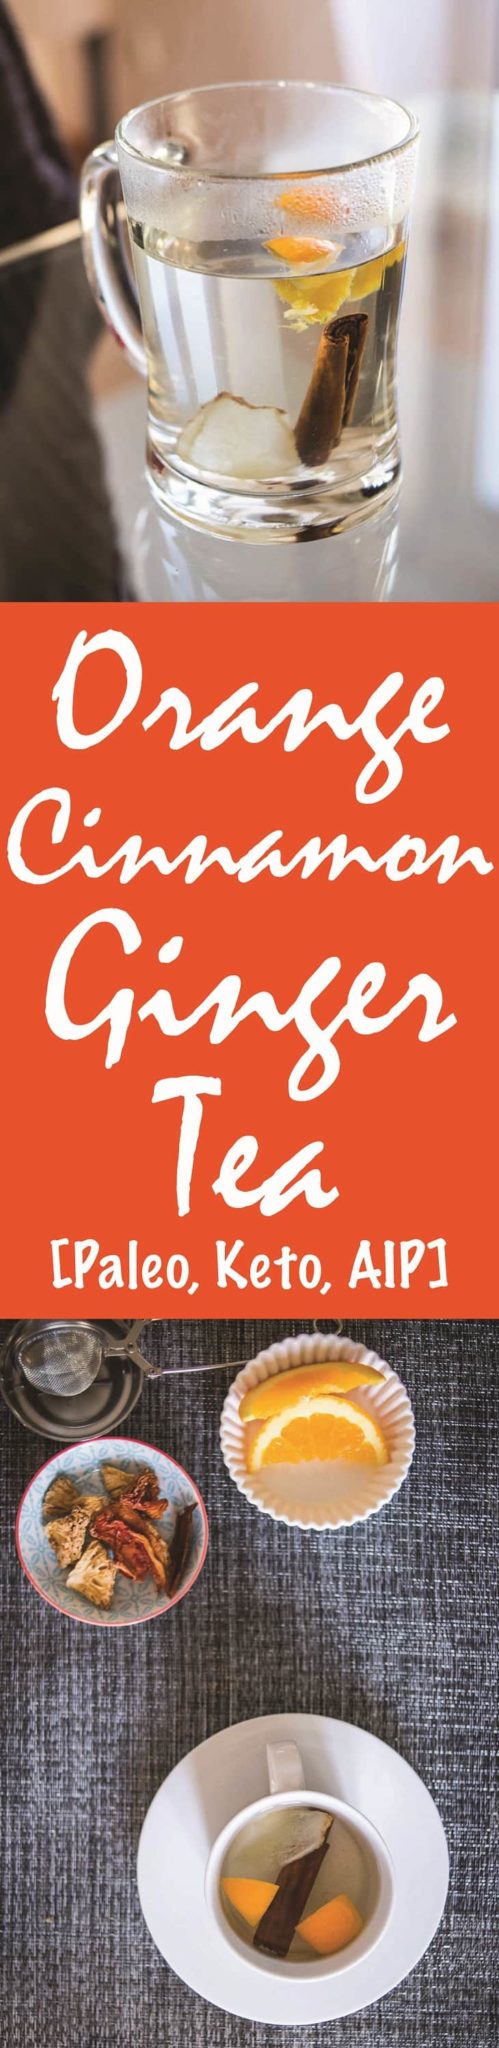 Orange Cinnamon Ginger Tea Recipe [Paleo, Keto, AIP] #paleo #keto #aip - https://paleoflourish.com/orange-cinnamon-ginger-tea-recipe